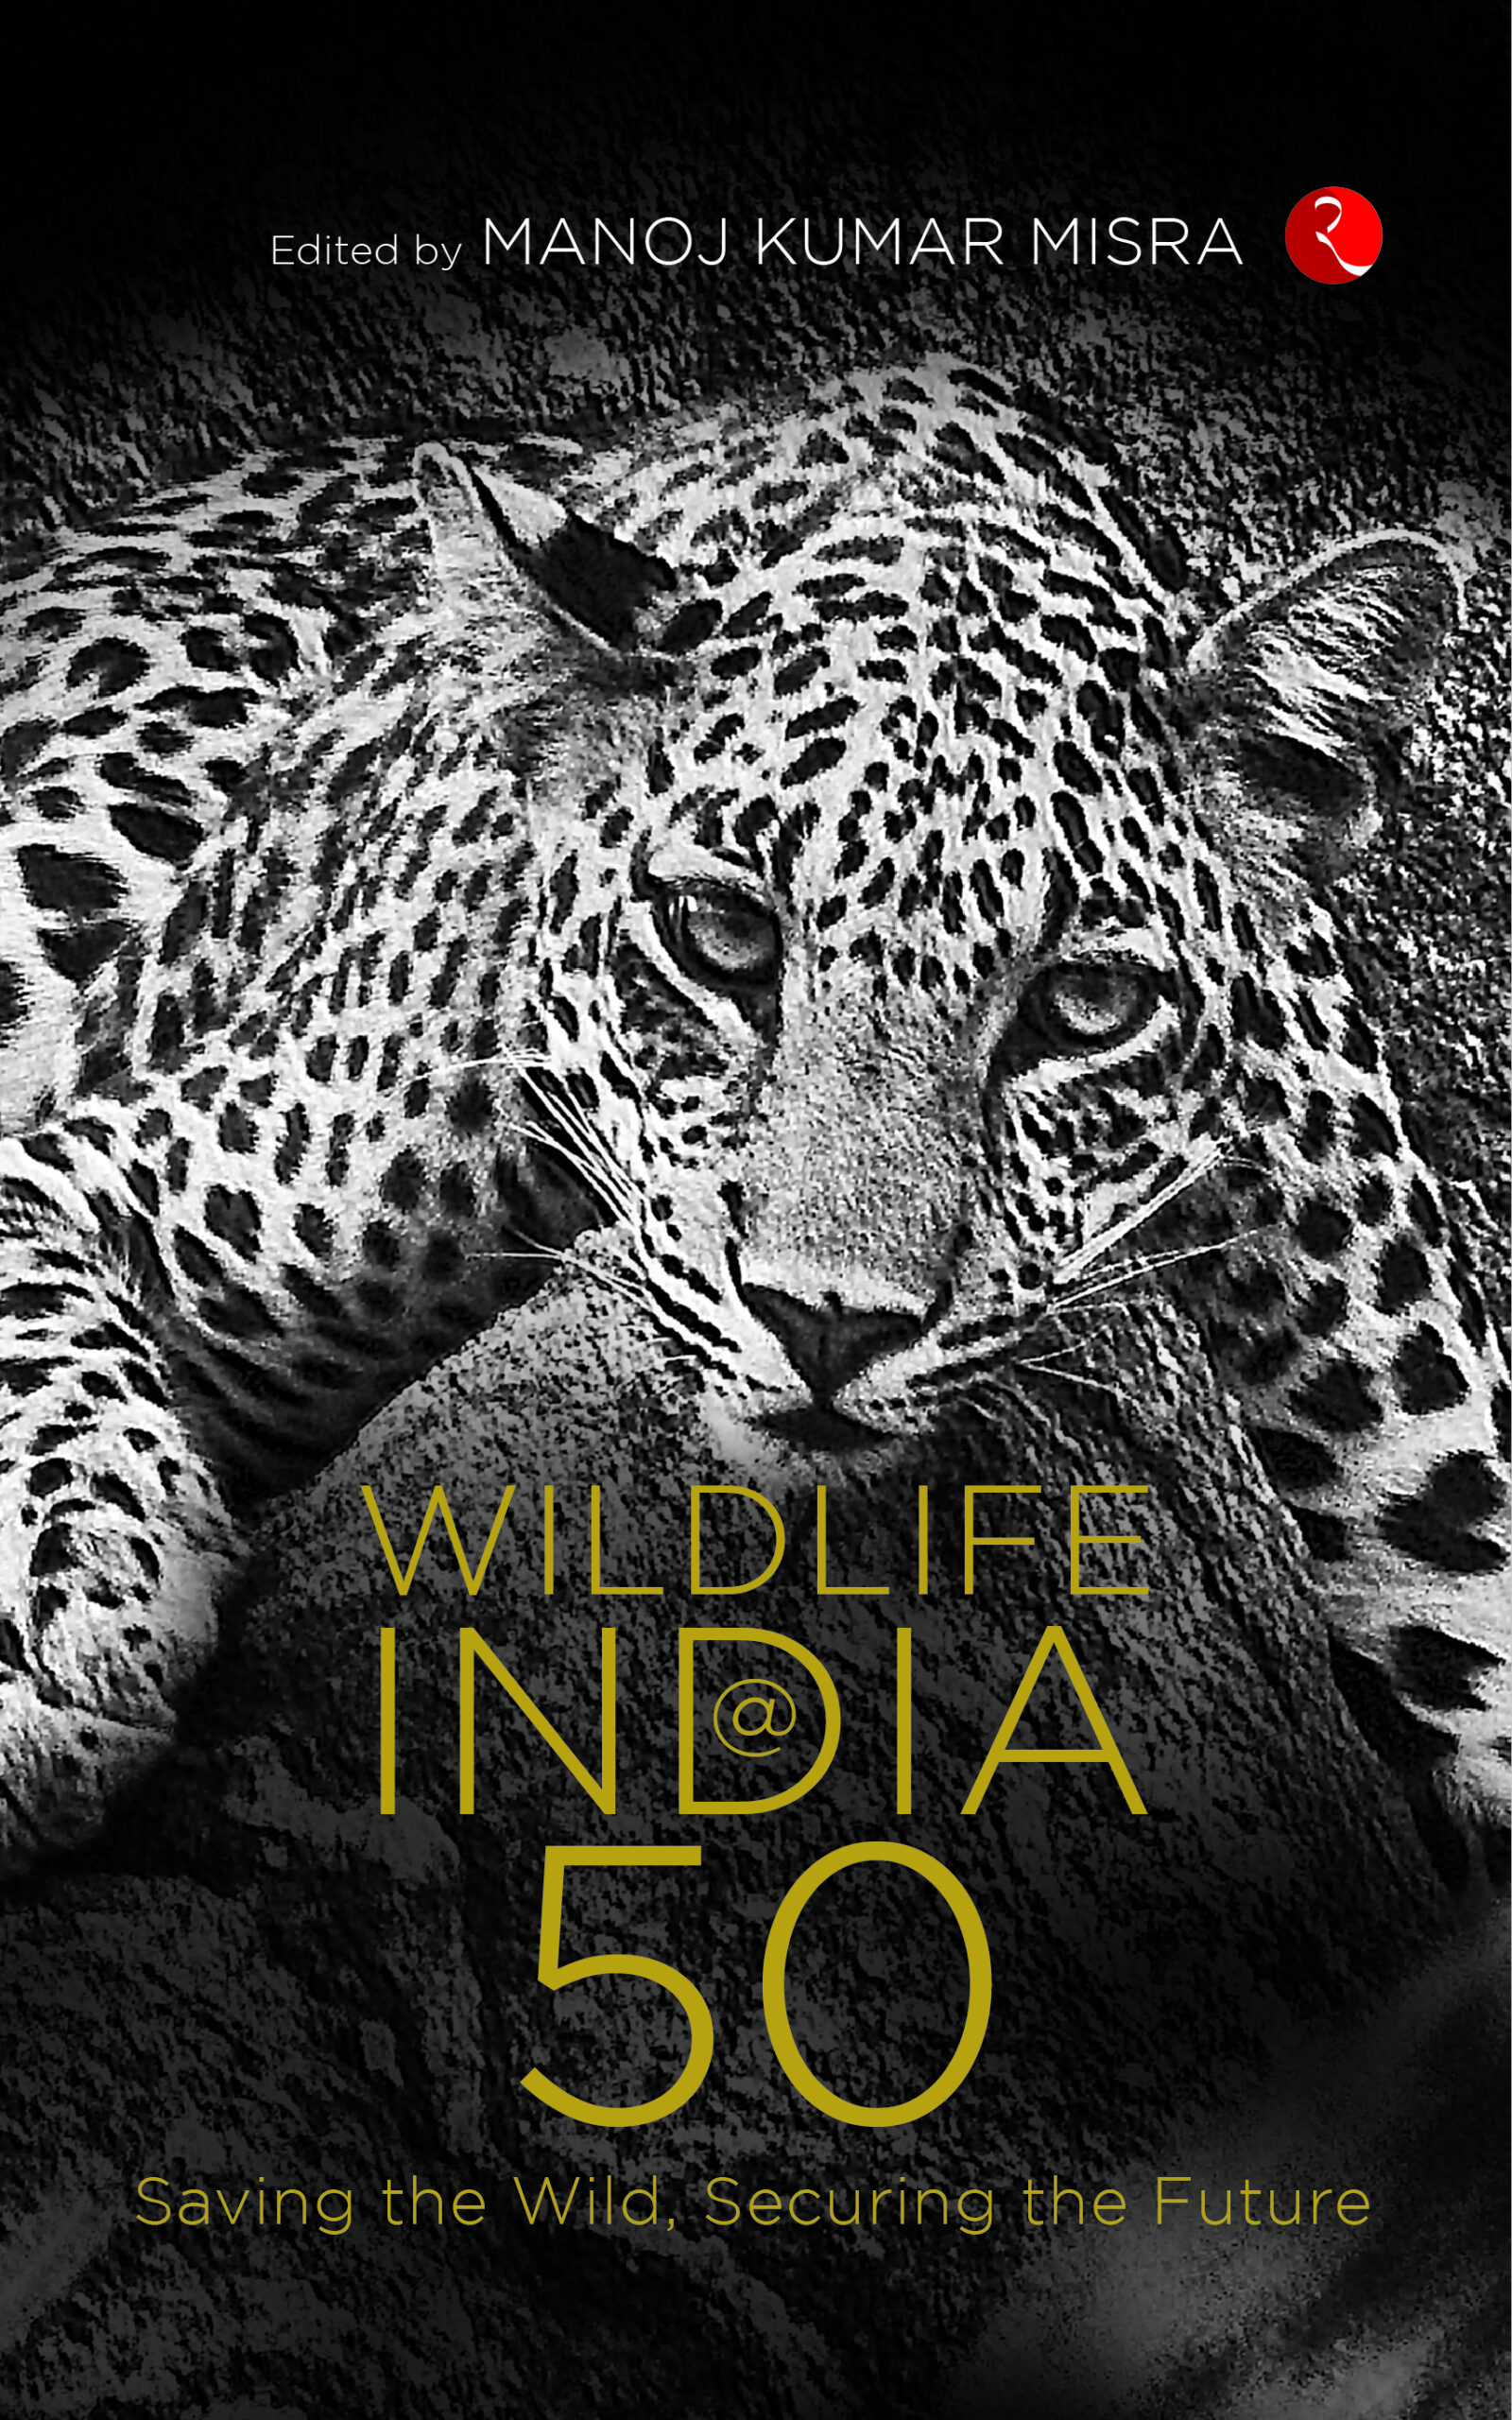 "Wildlife India@50" details the changing shades of wildlife legislation in India